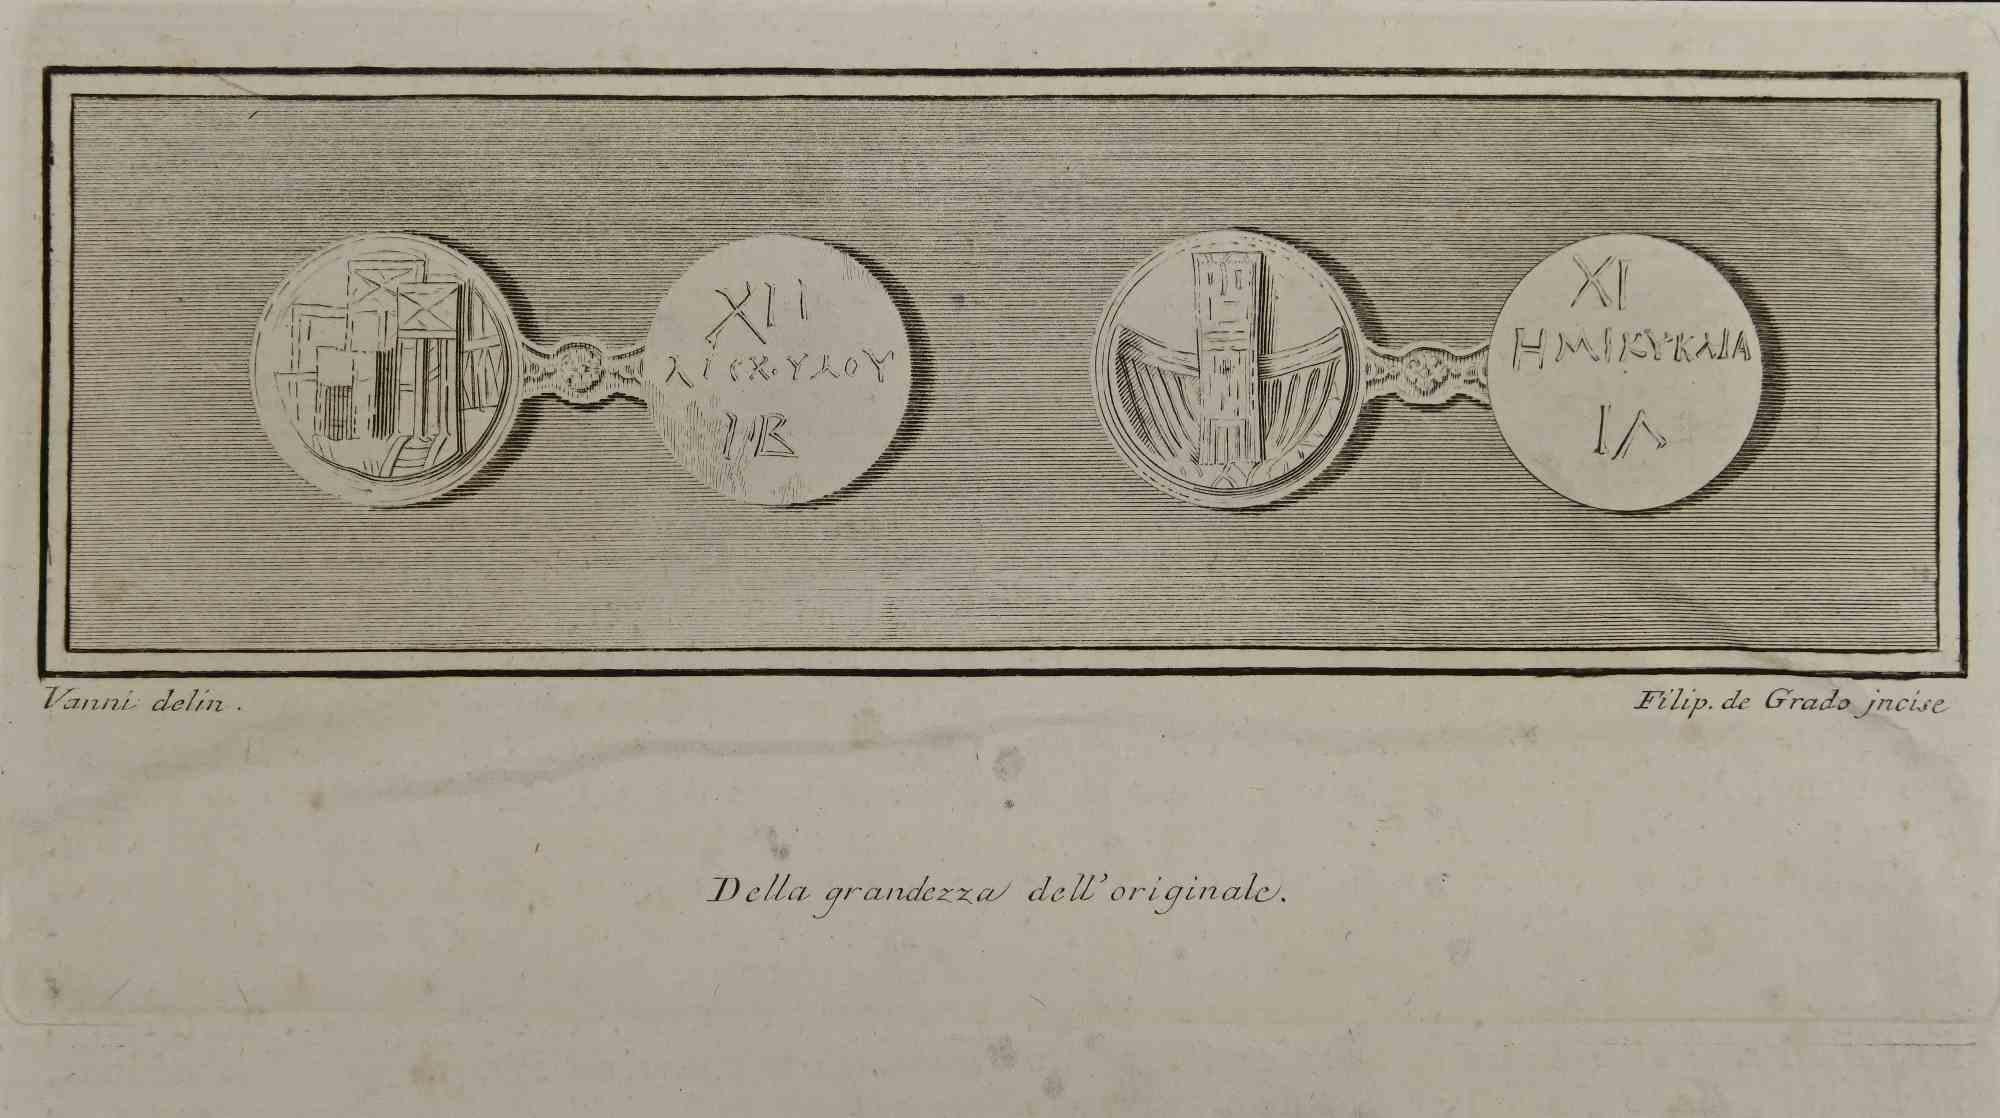 18th century coins